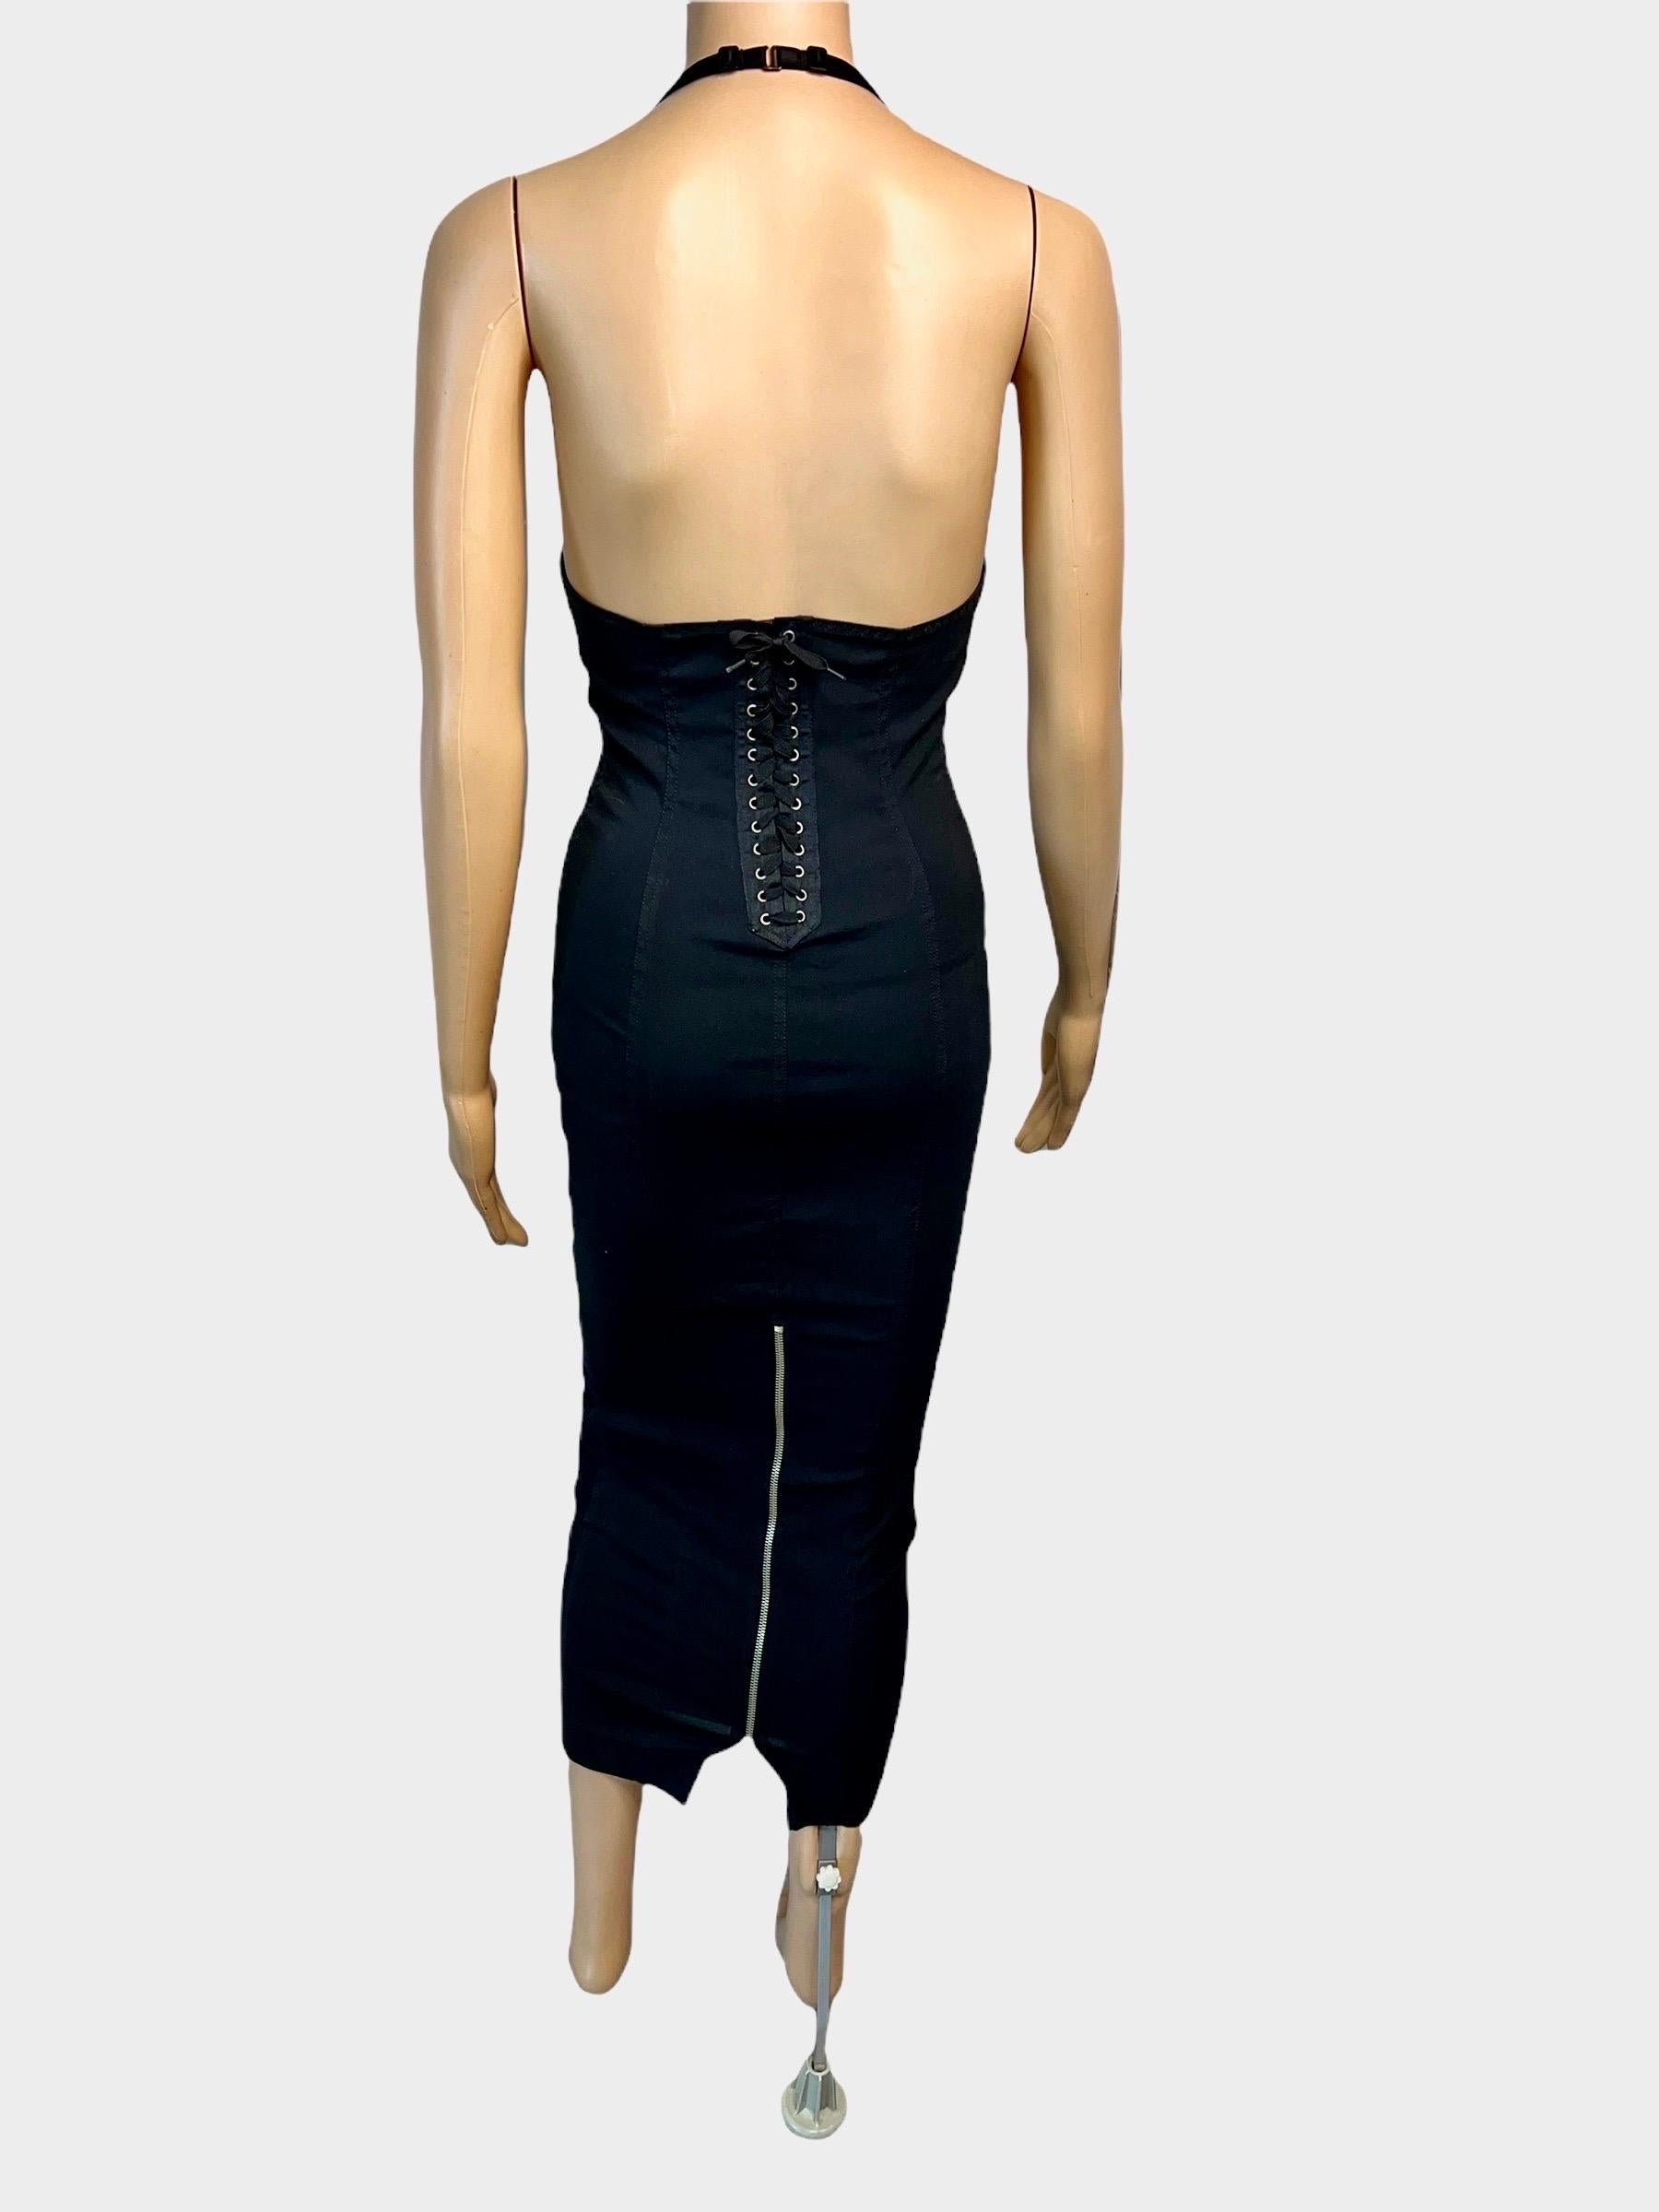 Jean Paul Gaultier 1990's Vintage Cone Bra Corset Bondage Black Evening Dress For Sale 8